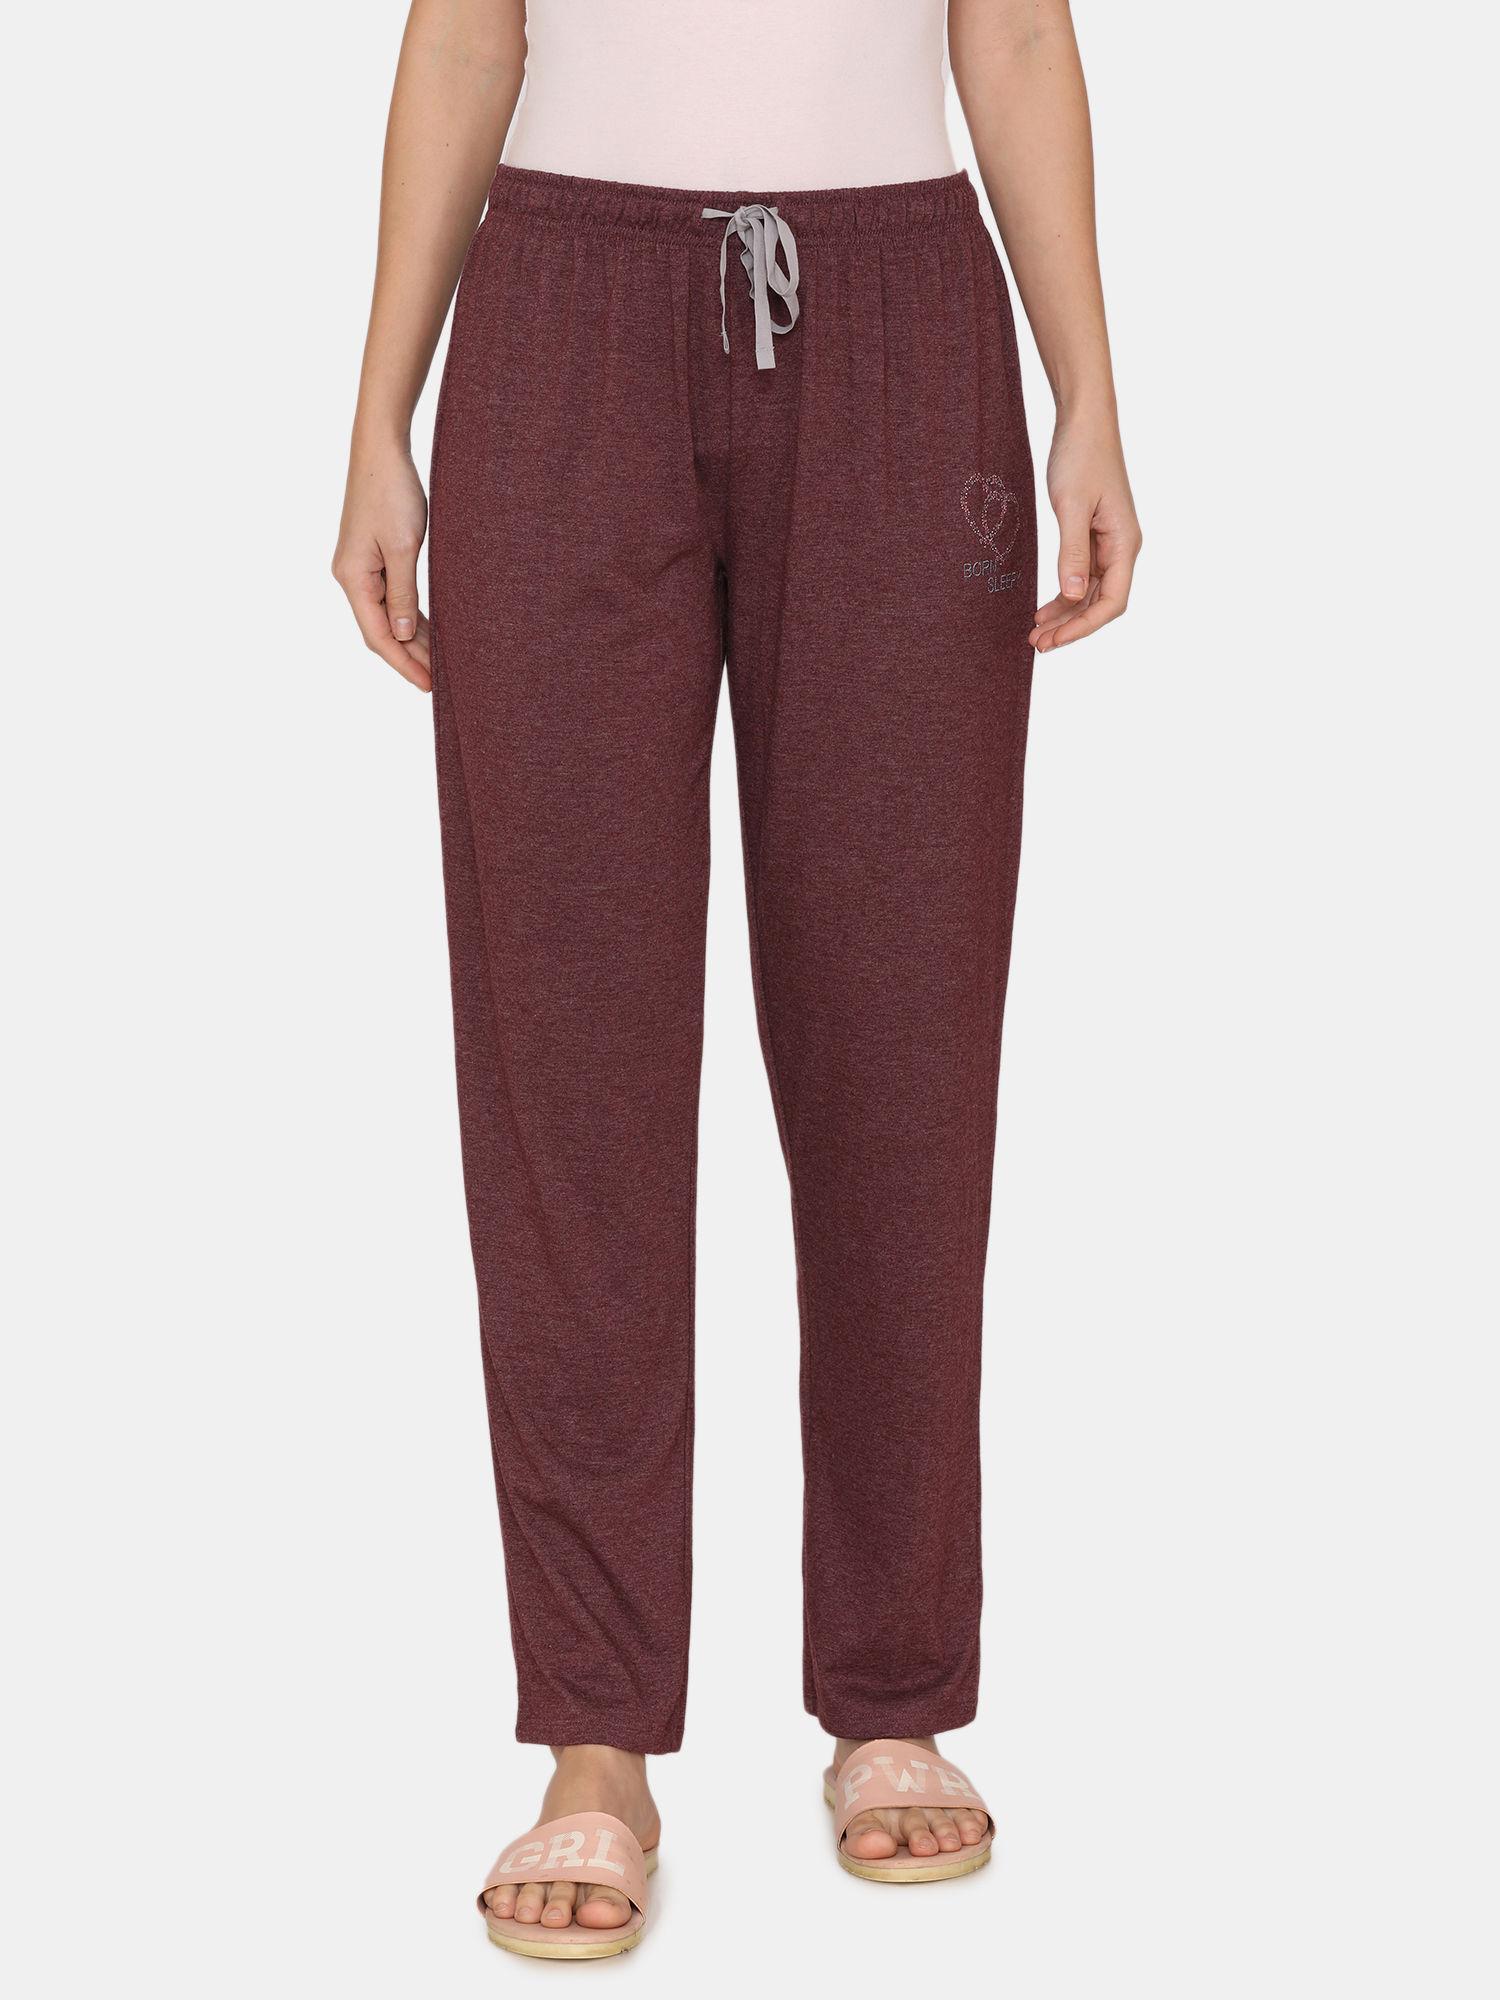 spatial speckle knit cotton pyjama - red